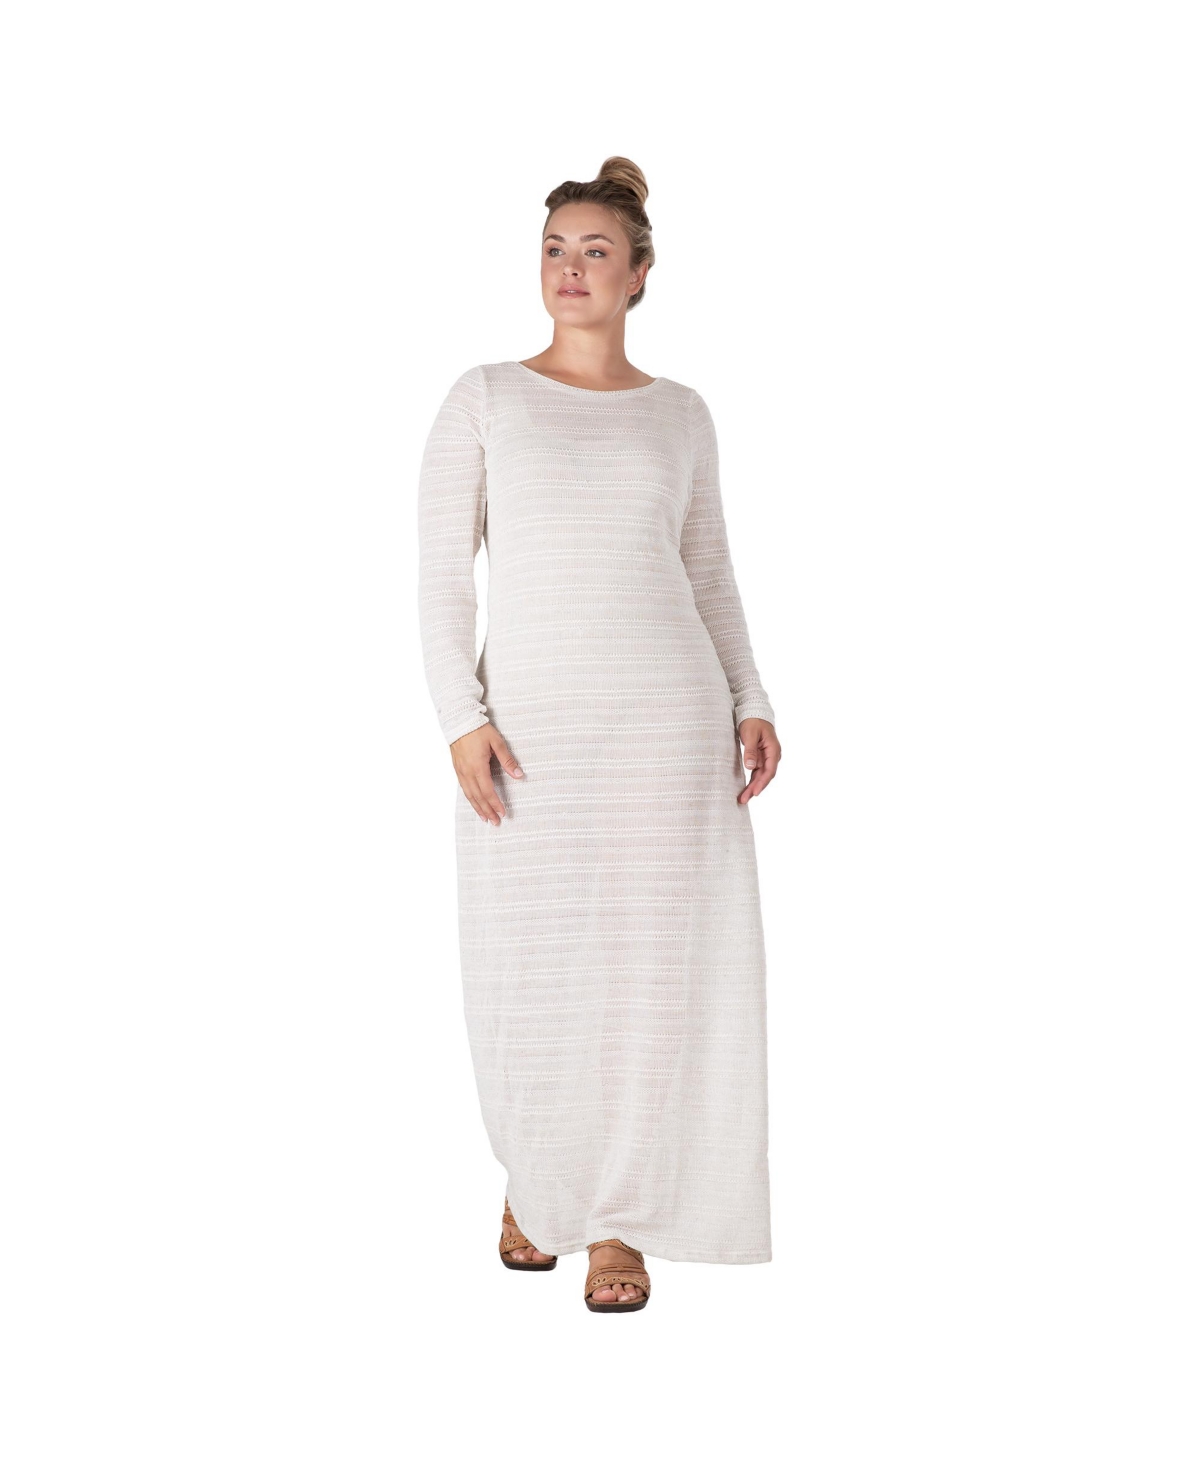 Women's Plus Size Knit Crochet Boat Neck Maxi Dress - Off-white